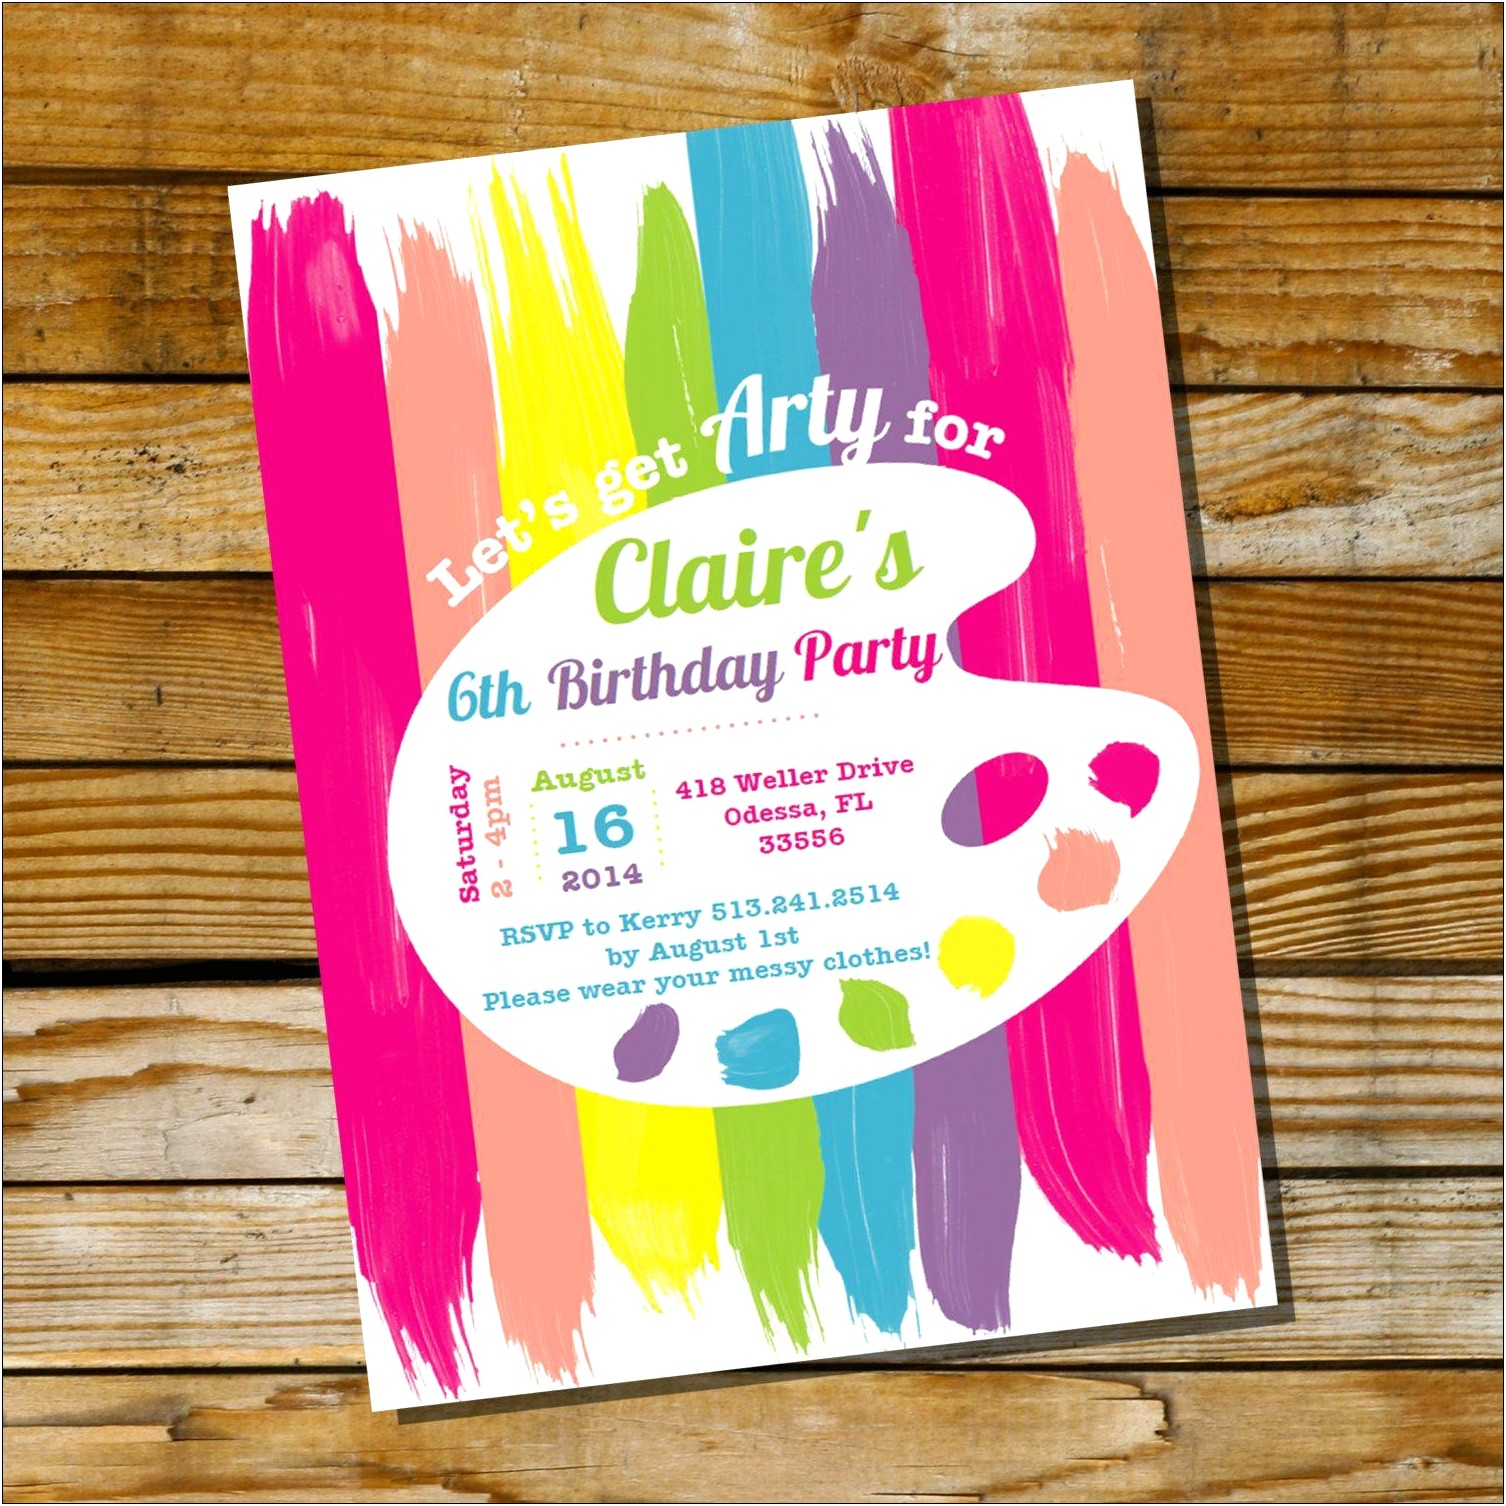 nerf-war-birthday-party-invitation-free-templates-templates-resume-designs-35v25opa14